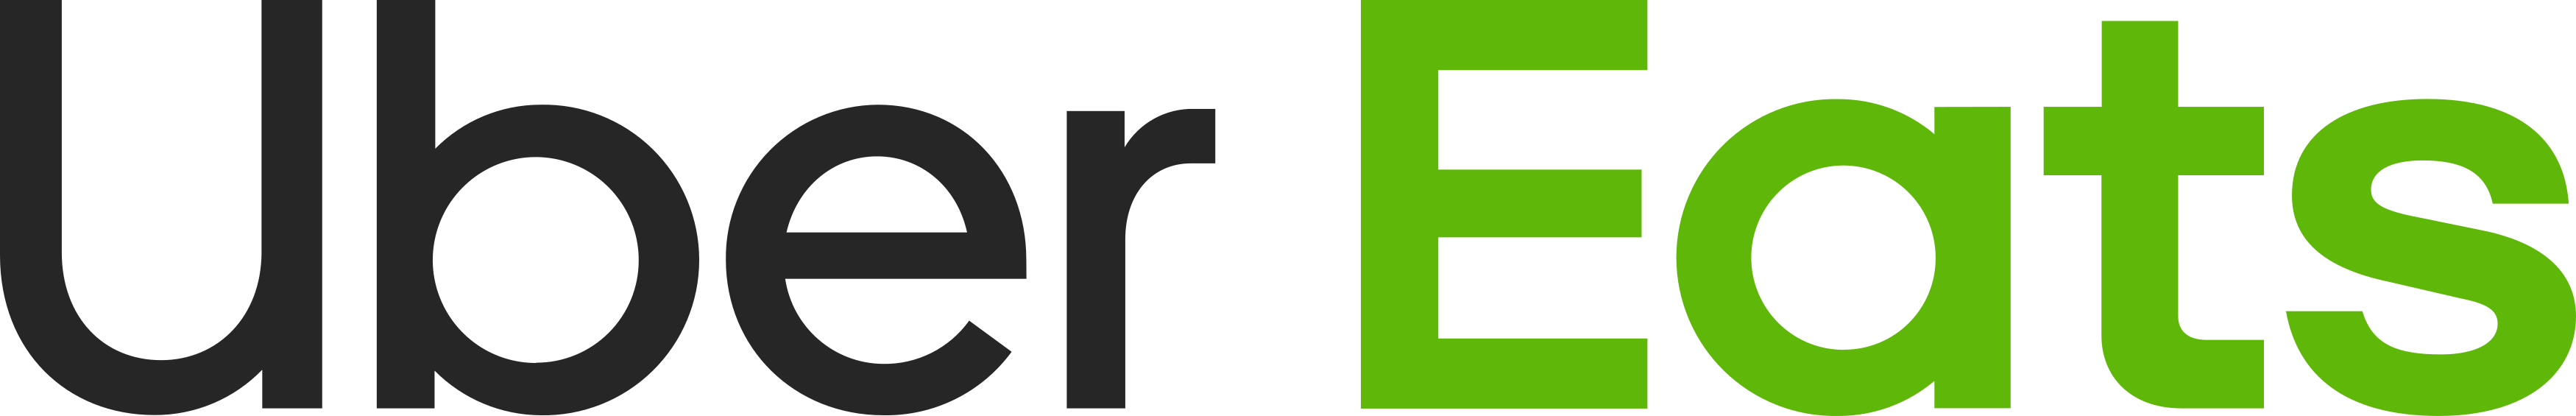 uber-eats-logo.png